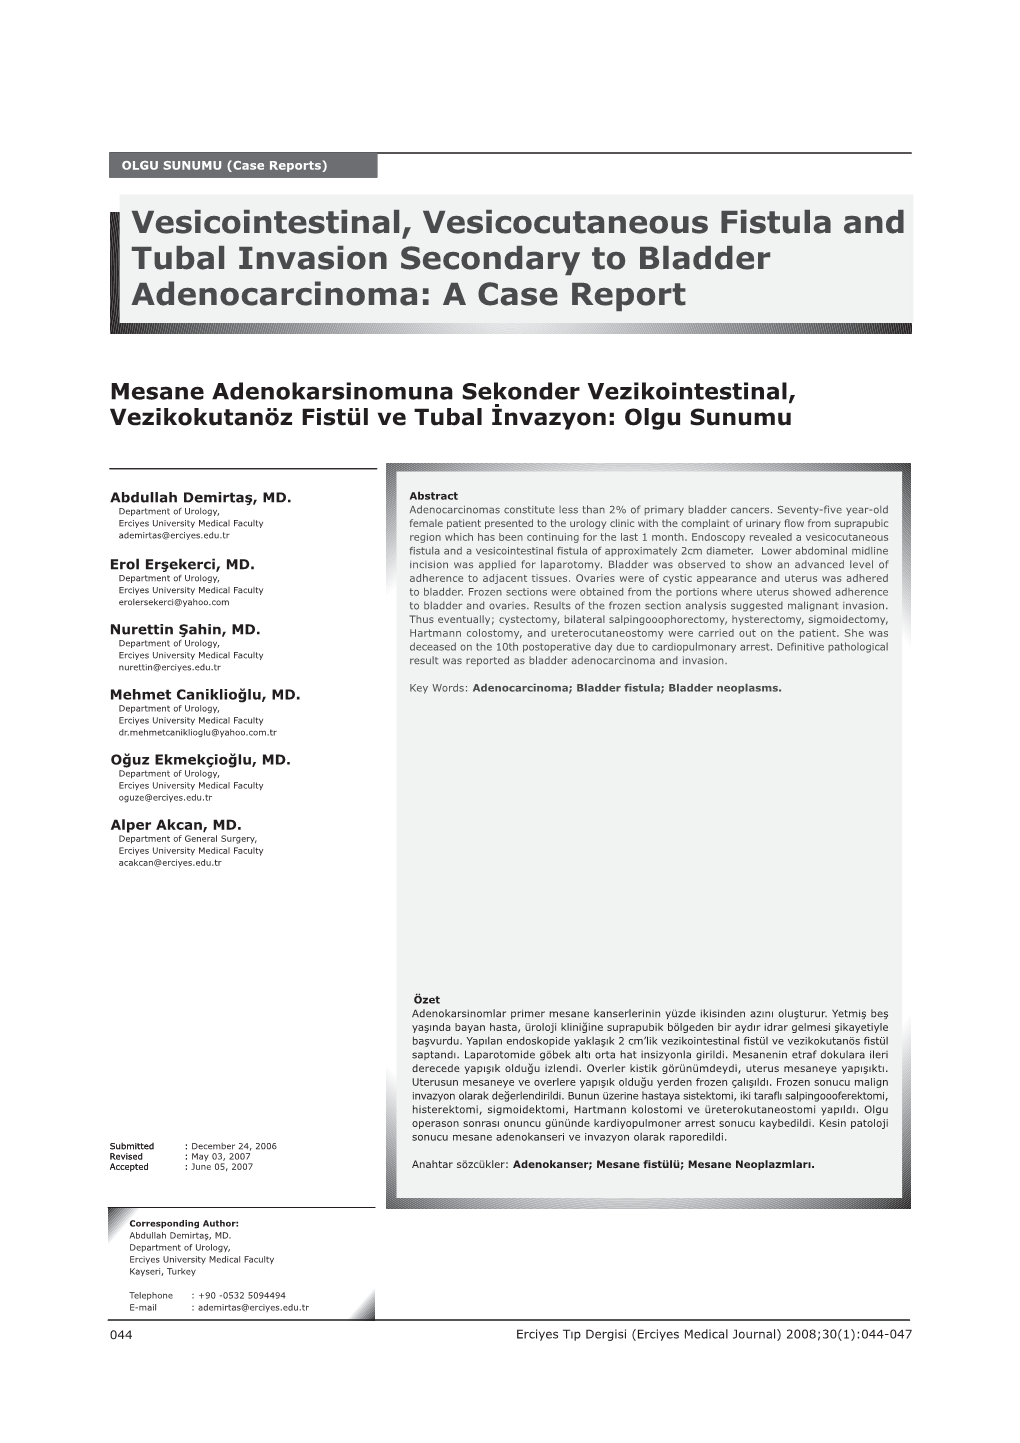 Vesicointestinal, Vesicocutaneous Fistula and Tubal Invasion Secondary to Bladder Adenocarcinoma: a Case Report